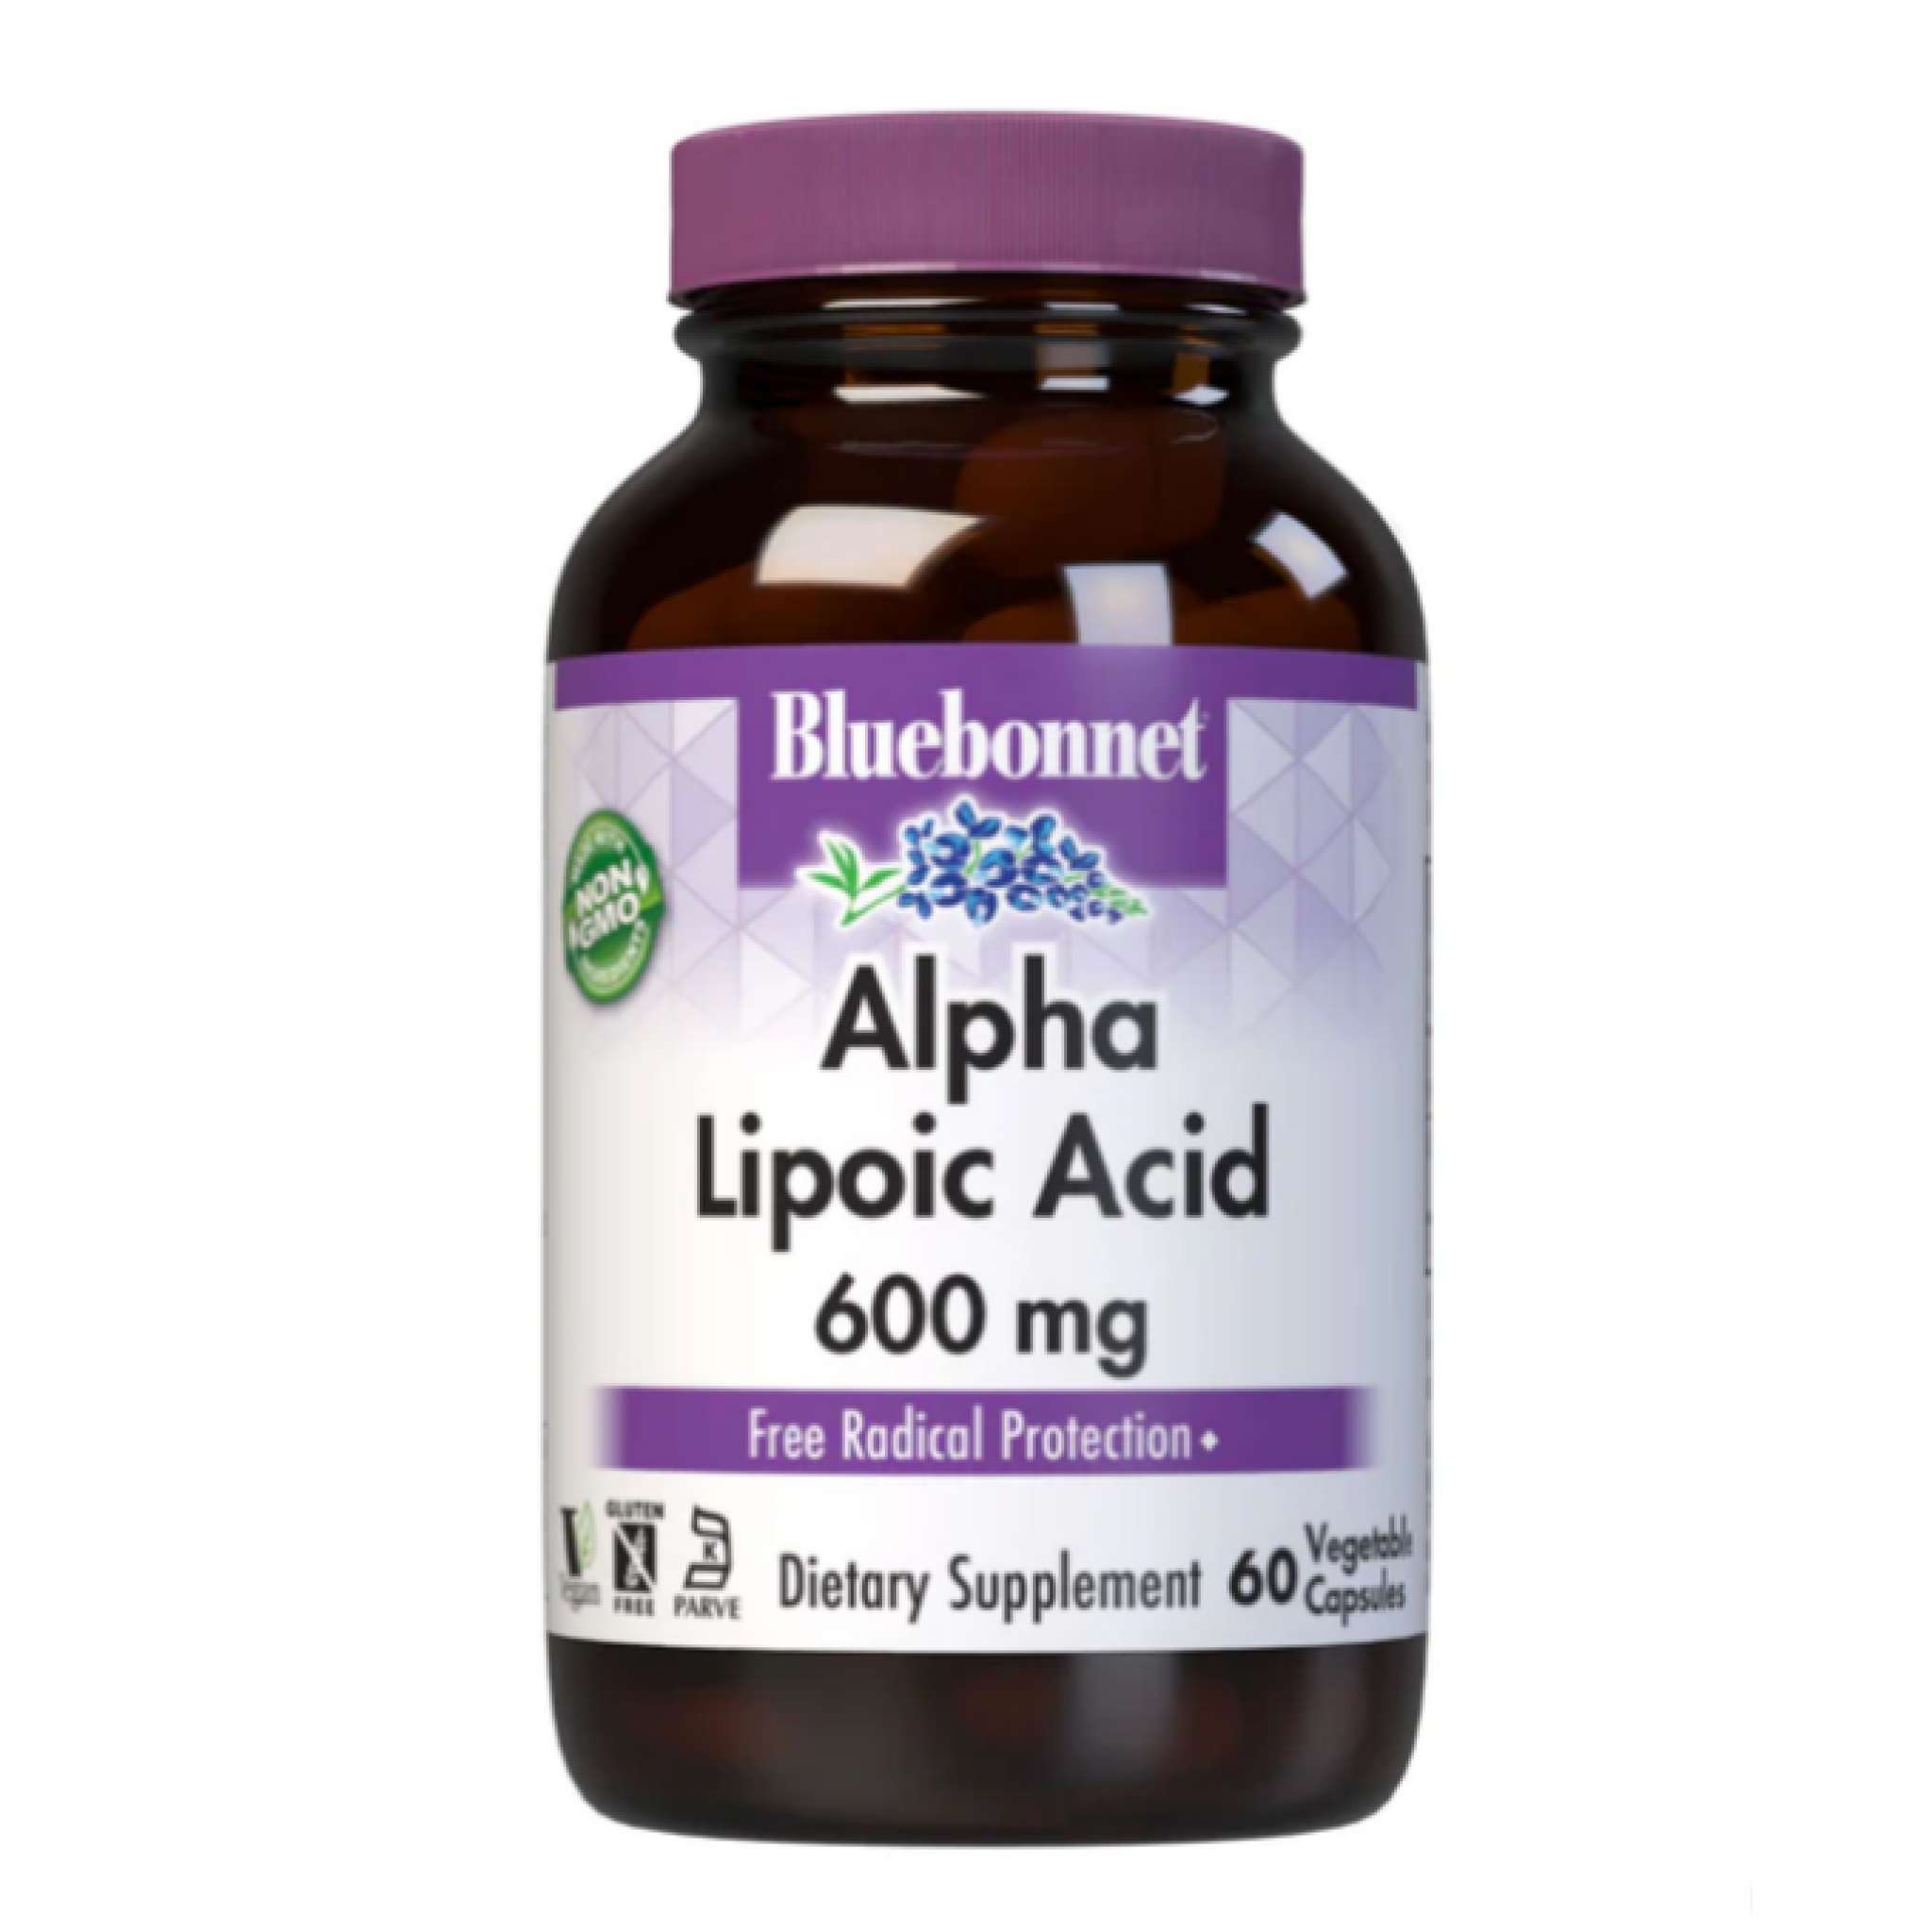 Bluebonnet - Lipoic Acid 600 mg Alpha